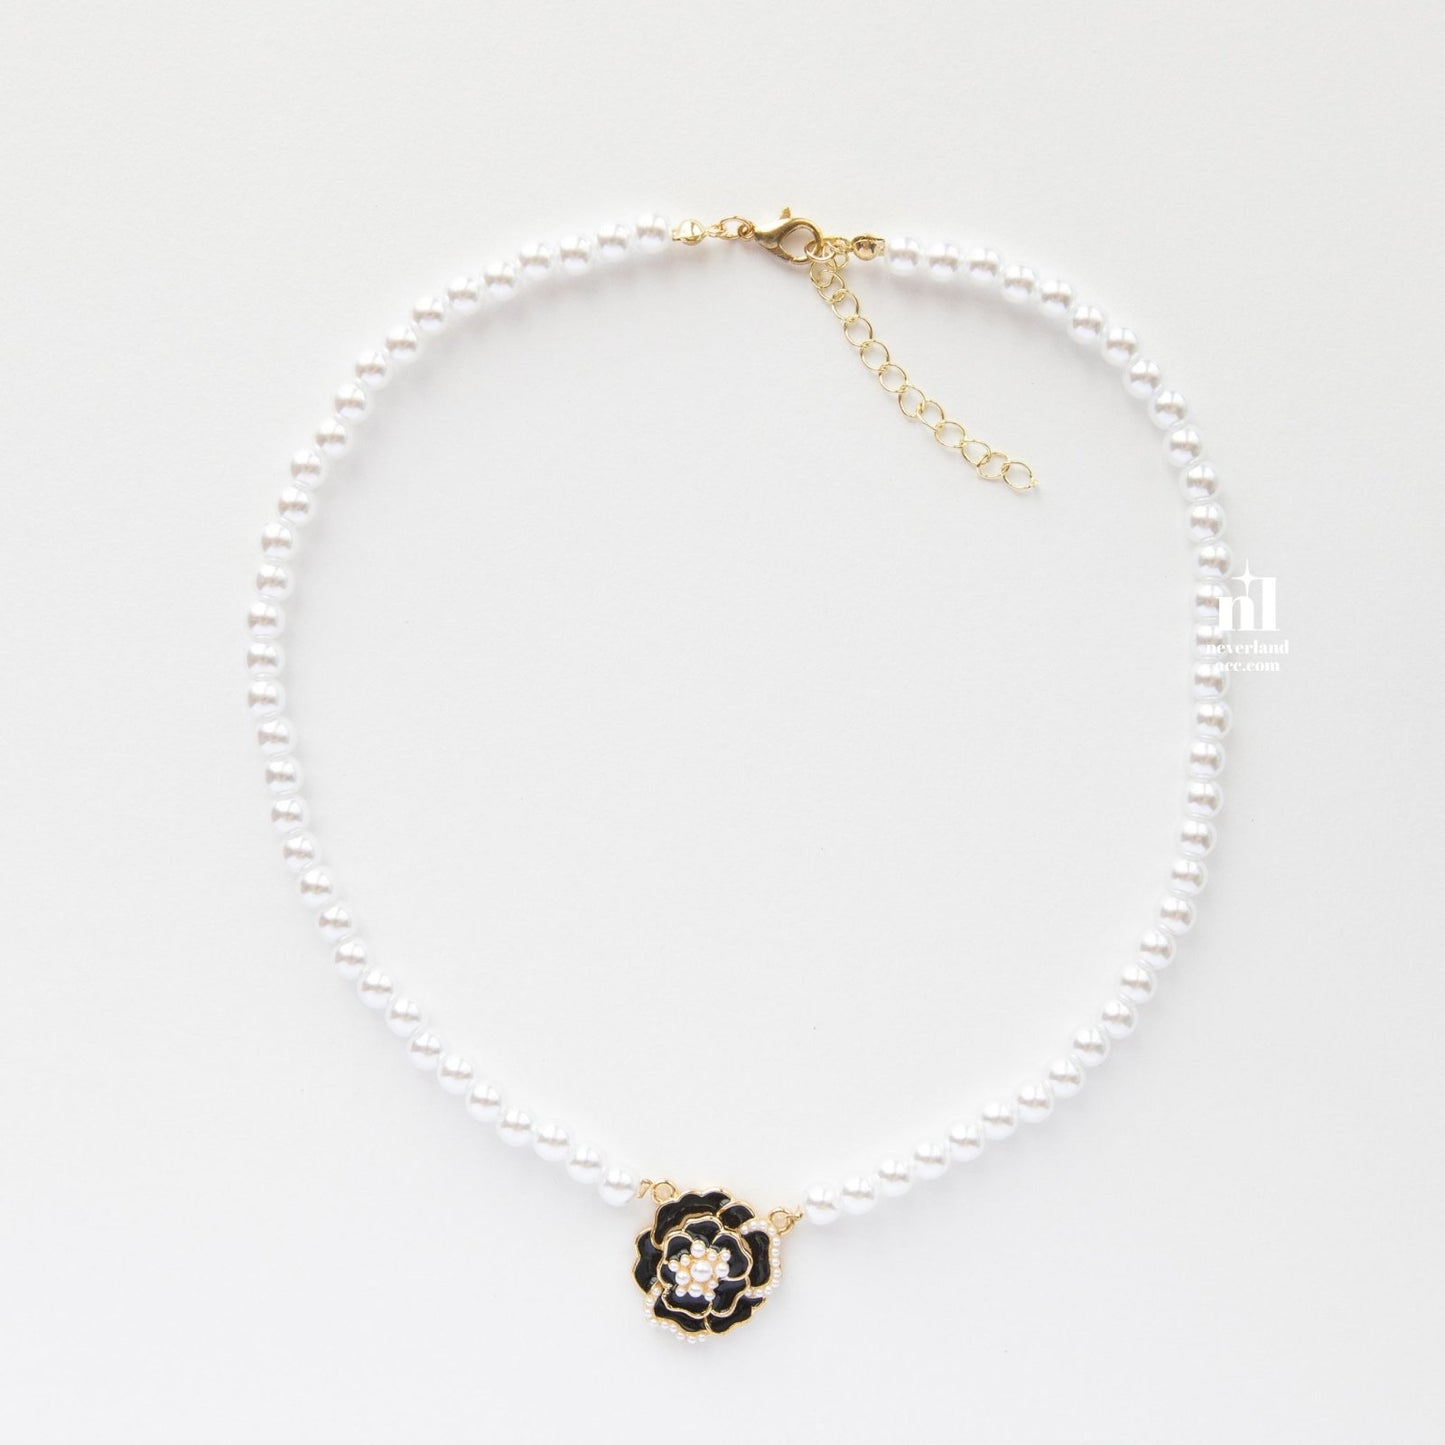 Black Camellia Pendant Pearl Necklace - neverland accessories